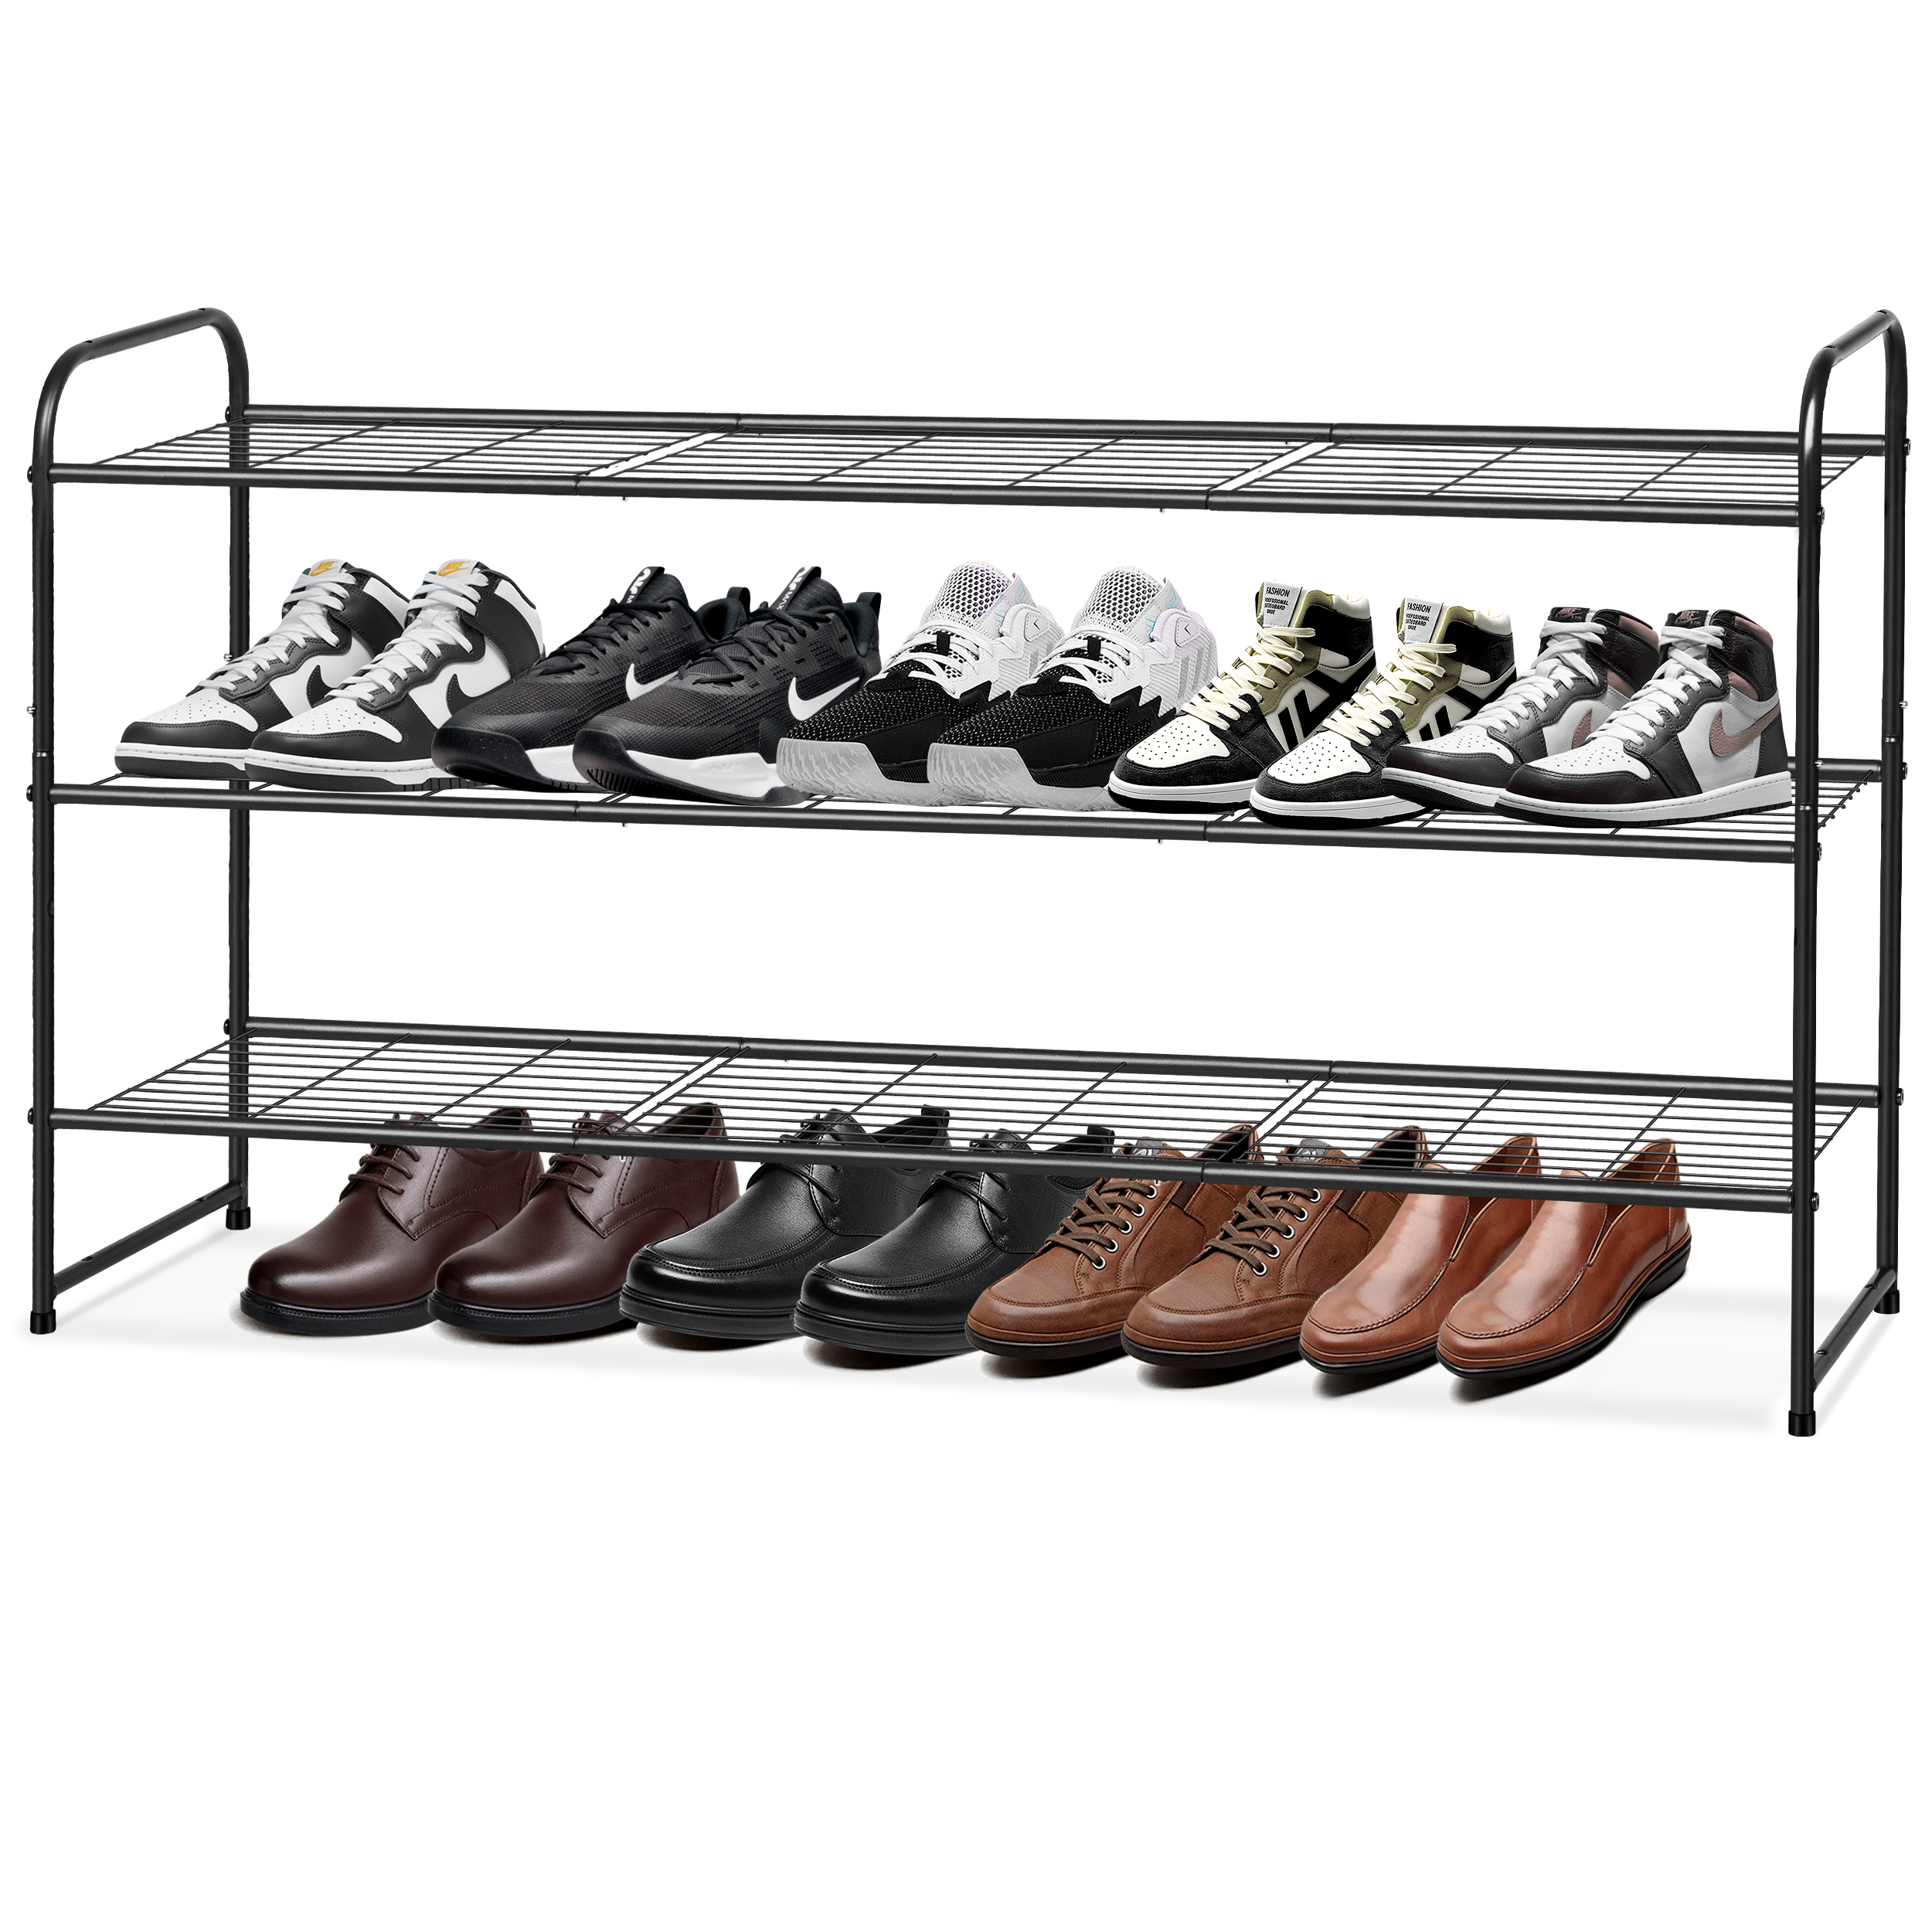 KEETDY 4-Tier Long Shoe Rack for Closet Floor, Wide Shoe Organizer